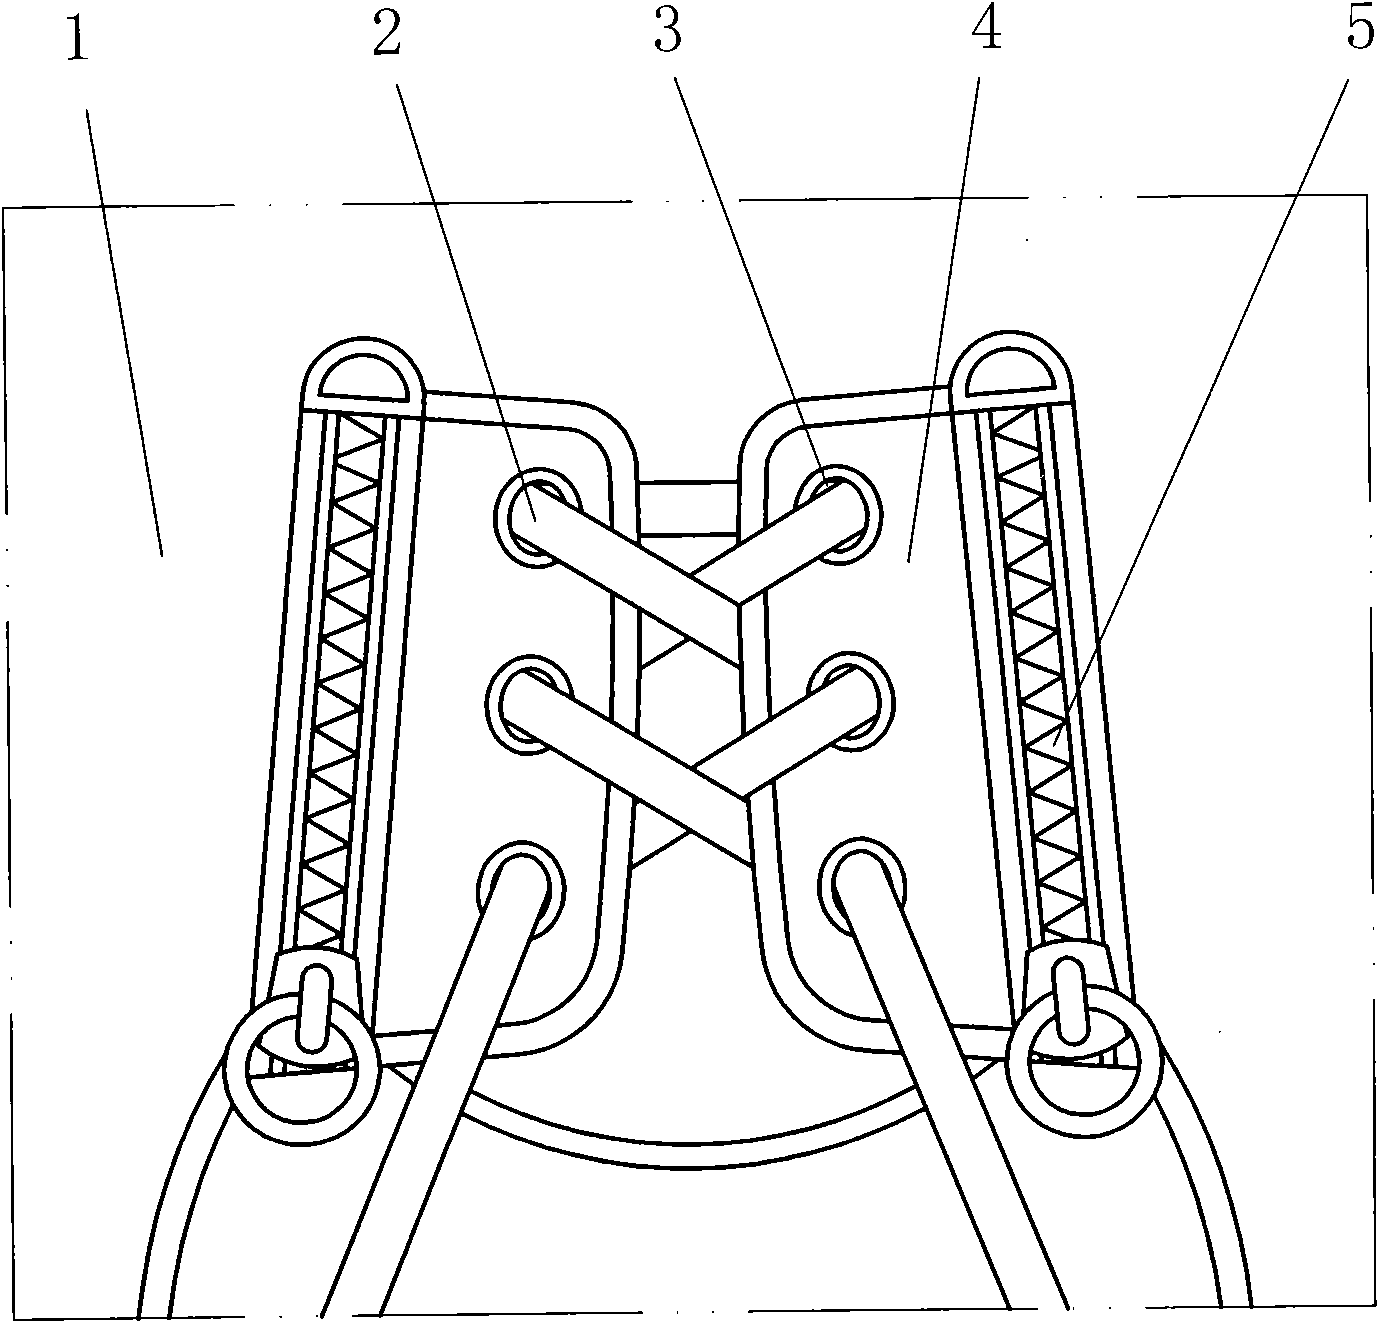 Combined shoe tying device